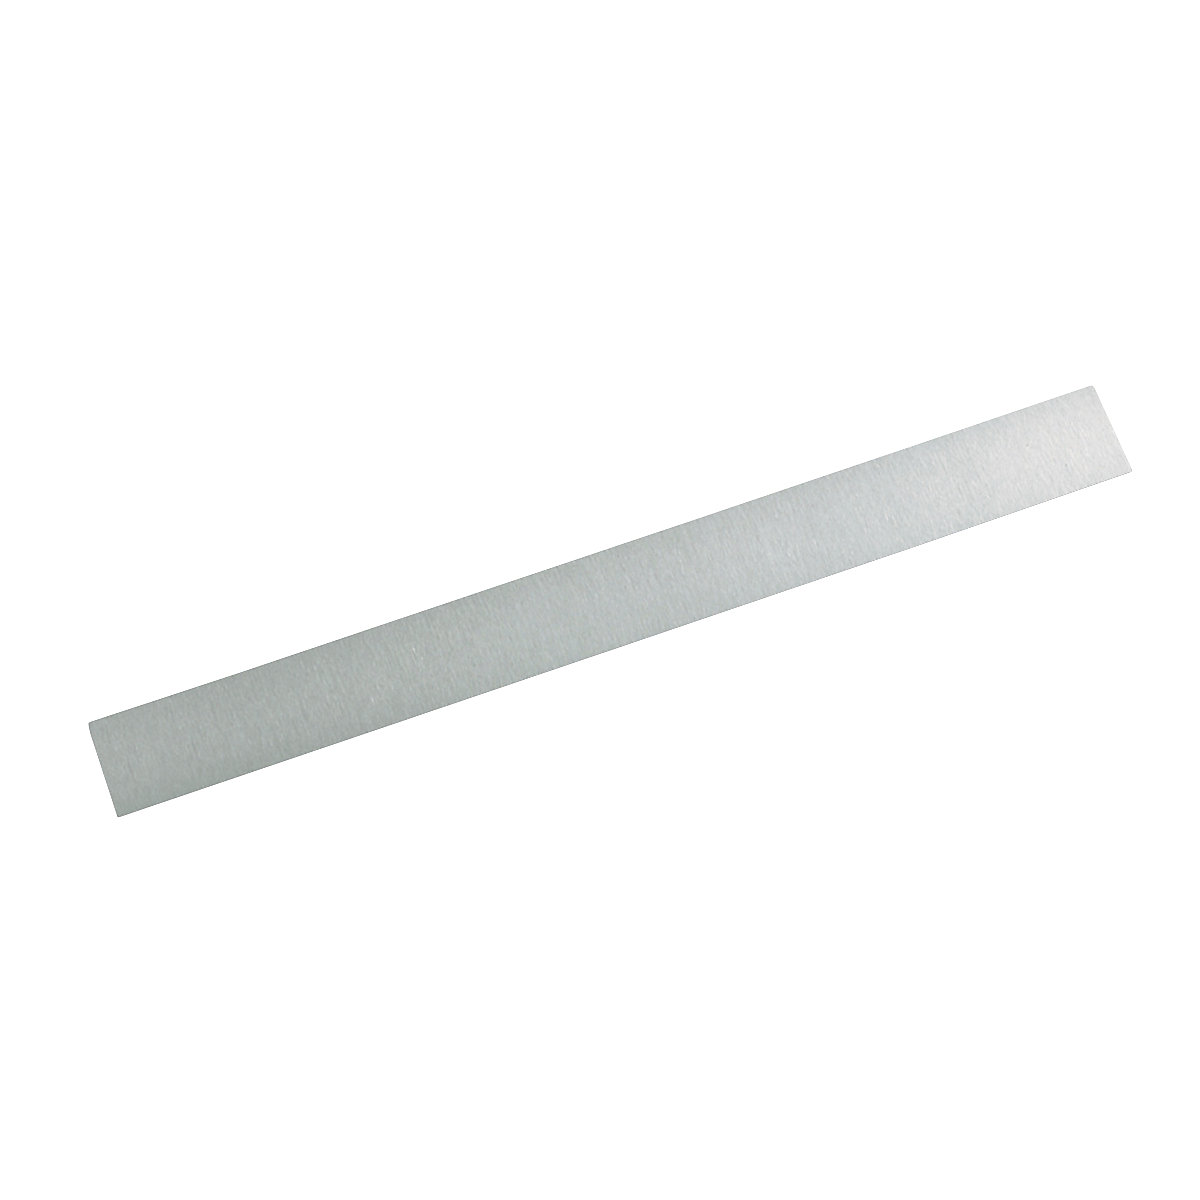 Ferrous strip – MAUL, width 50 mm, length 500 mm, pack of 10-1